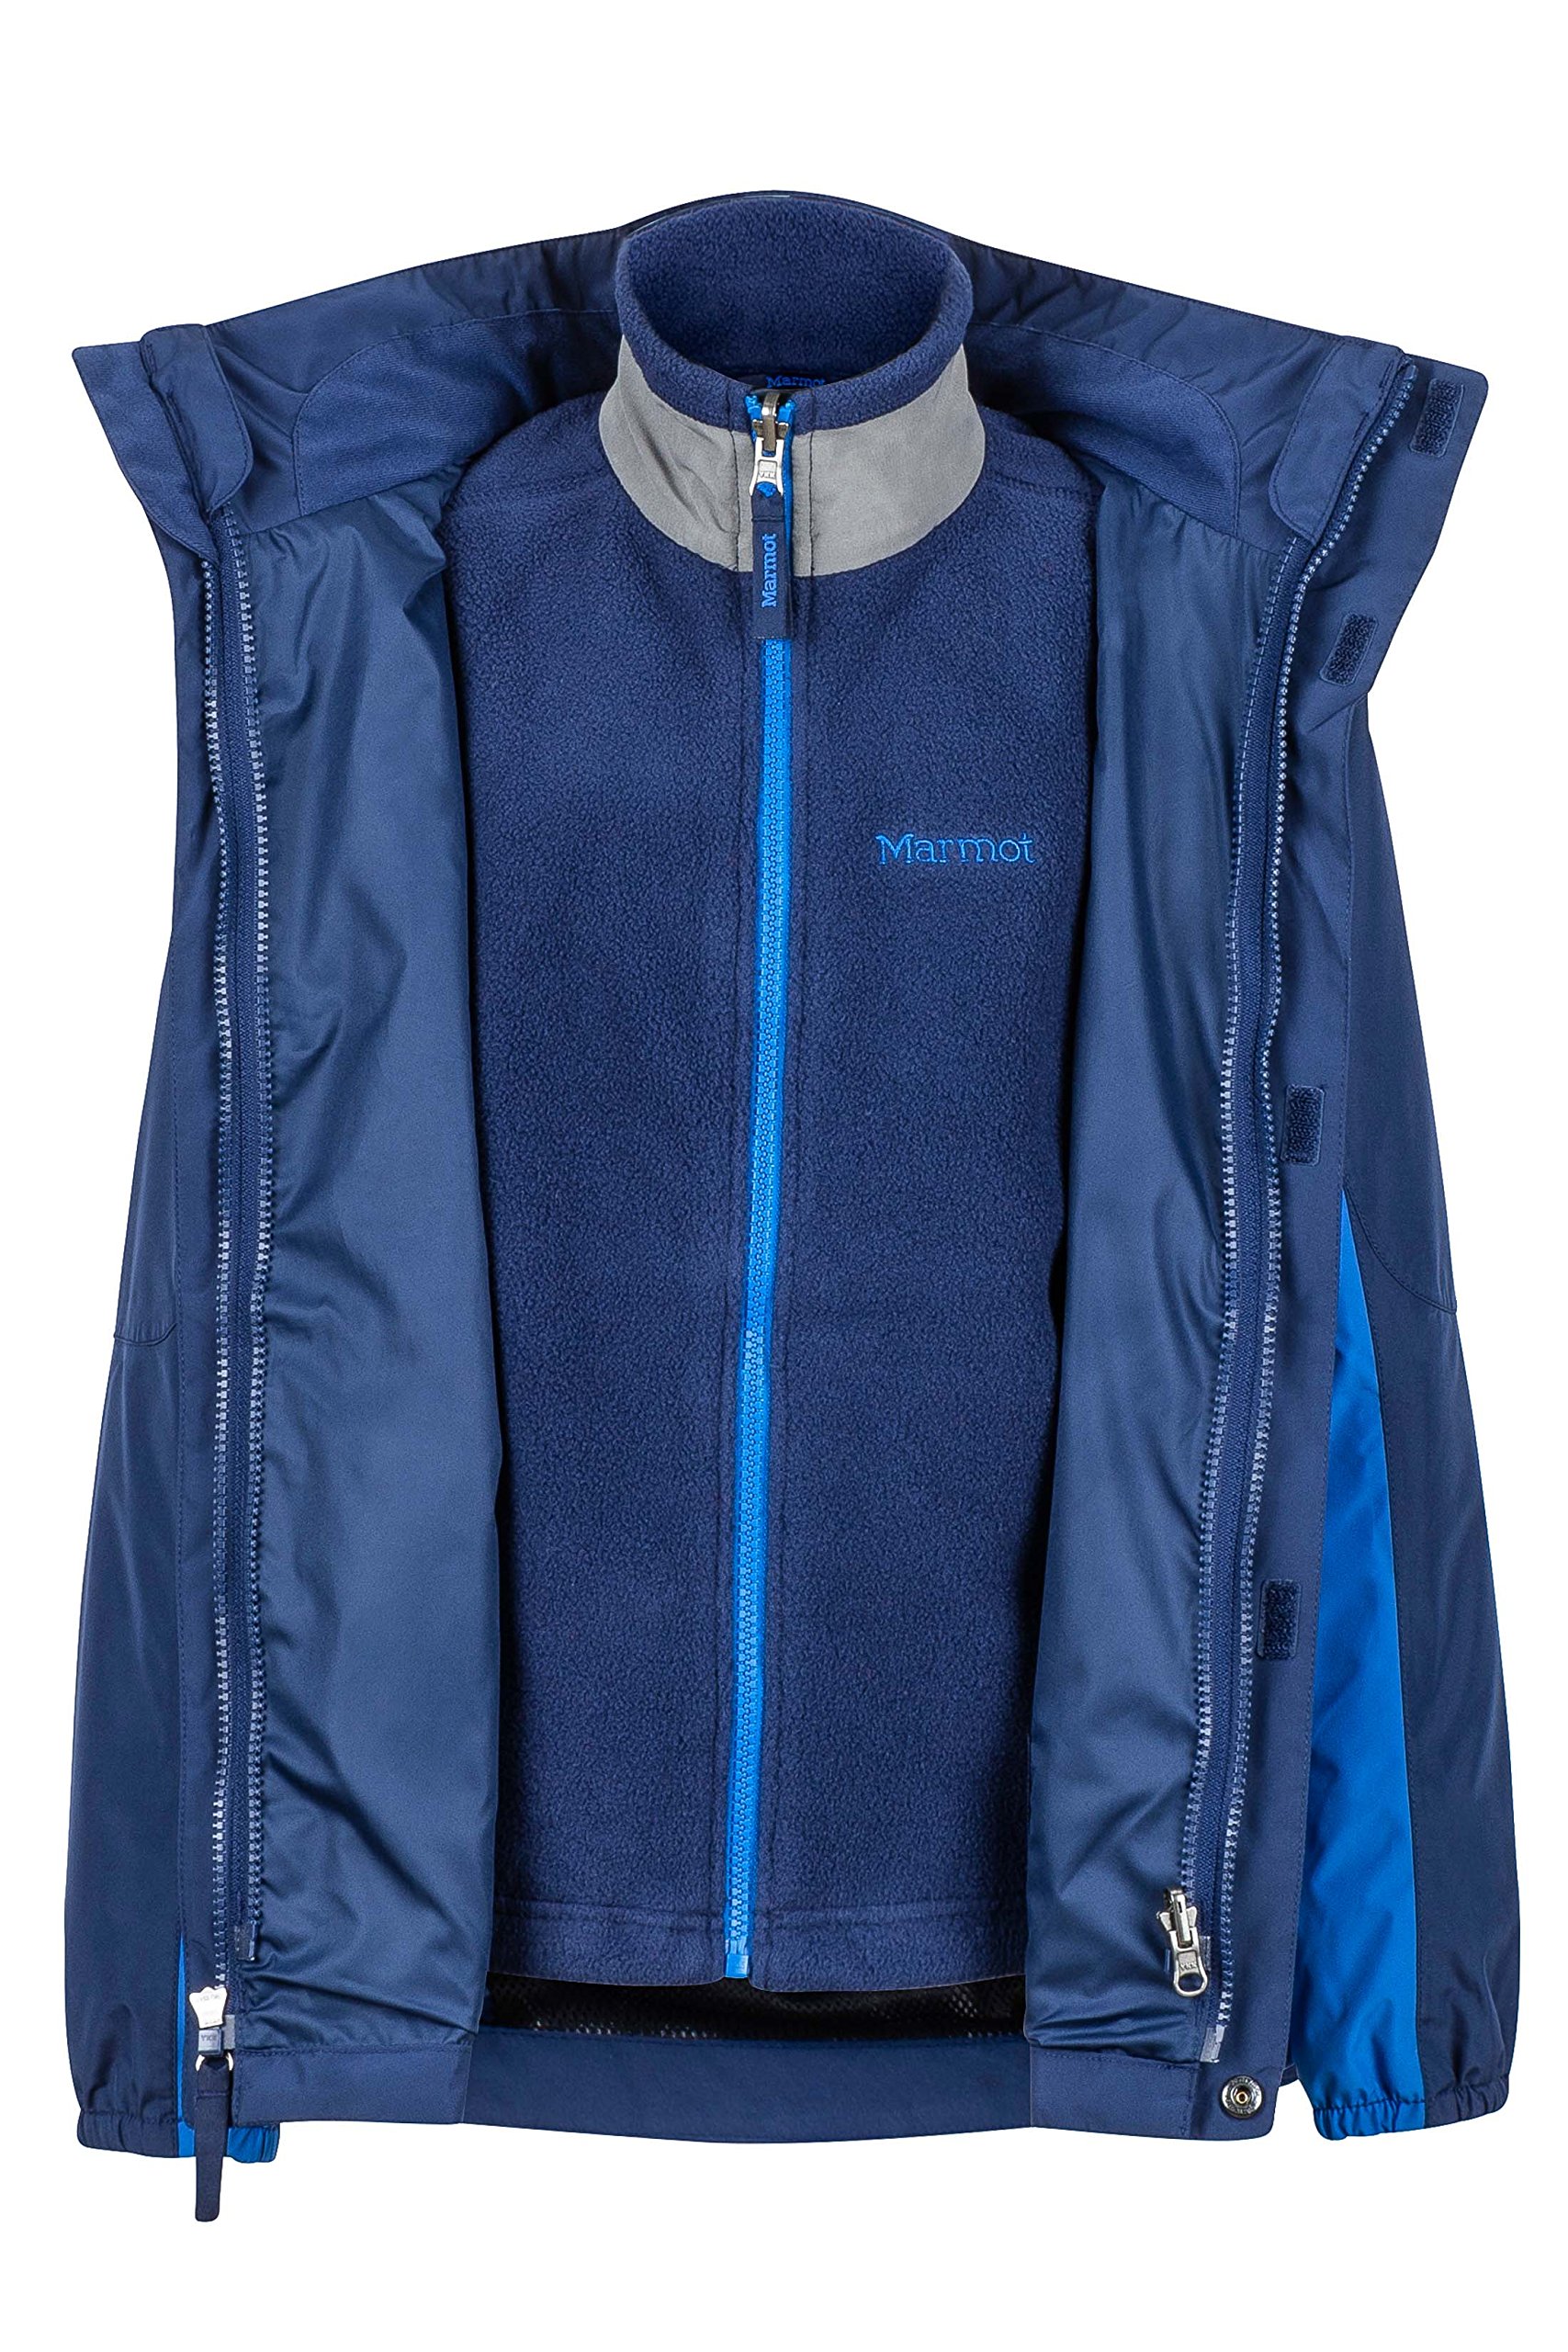 Marmot Boys' Northshore Waterproof Hooded Rain Jacket with Removable Fleece Liner